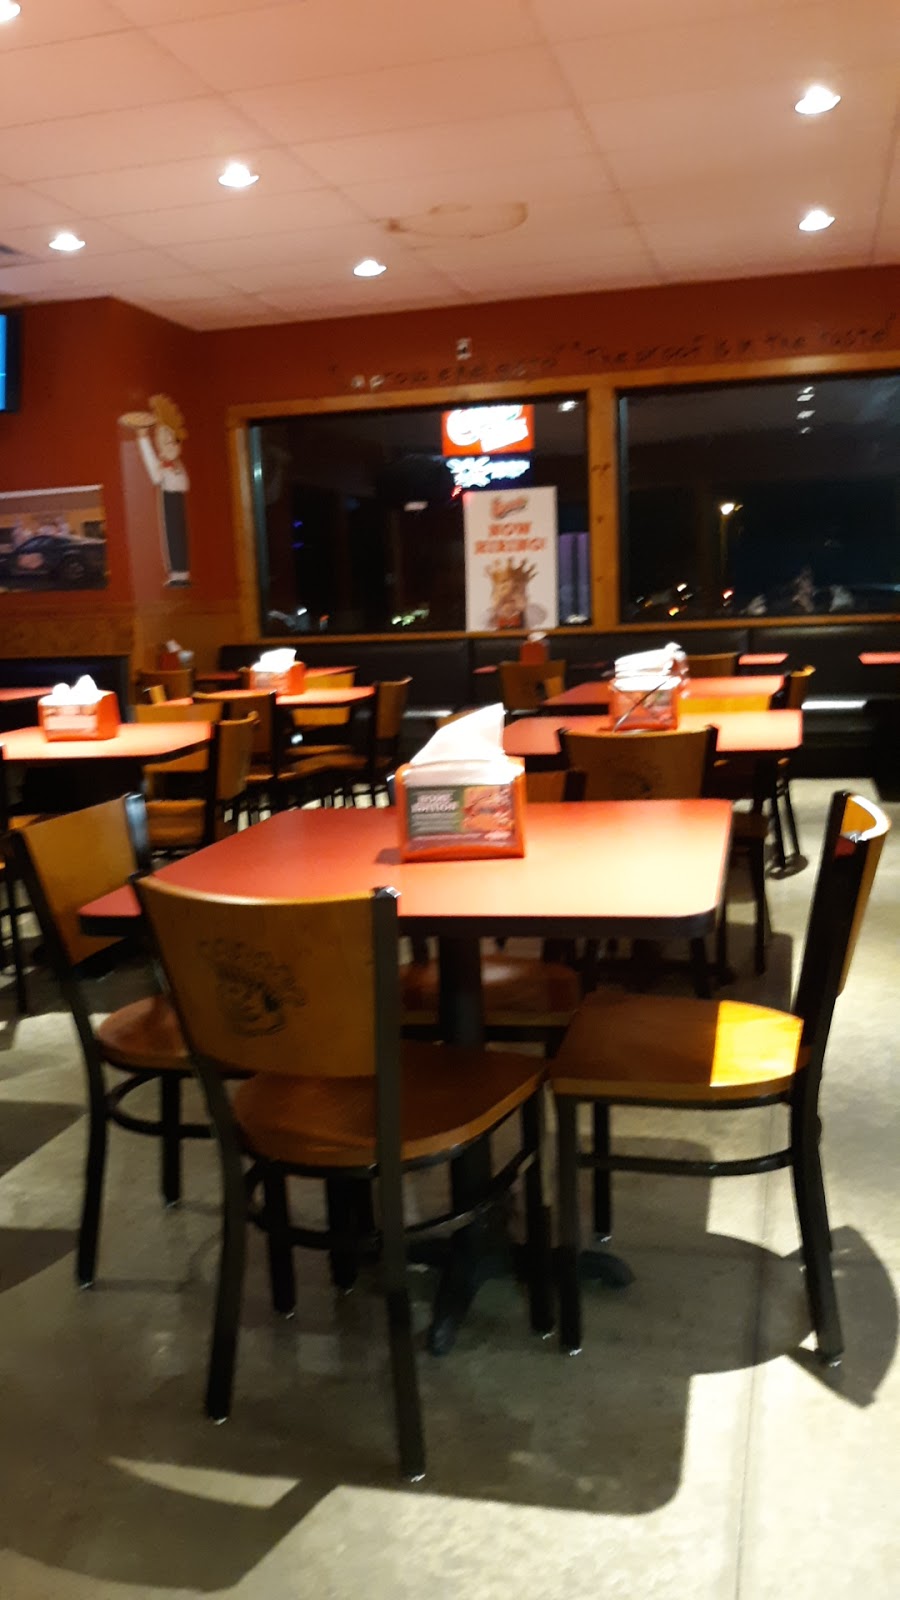 Cassanos Pizza King | 6308 W Third St, Dayton, OH 45417, USA | Phone: (888) 294-5464